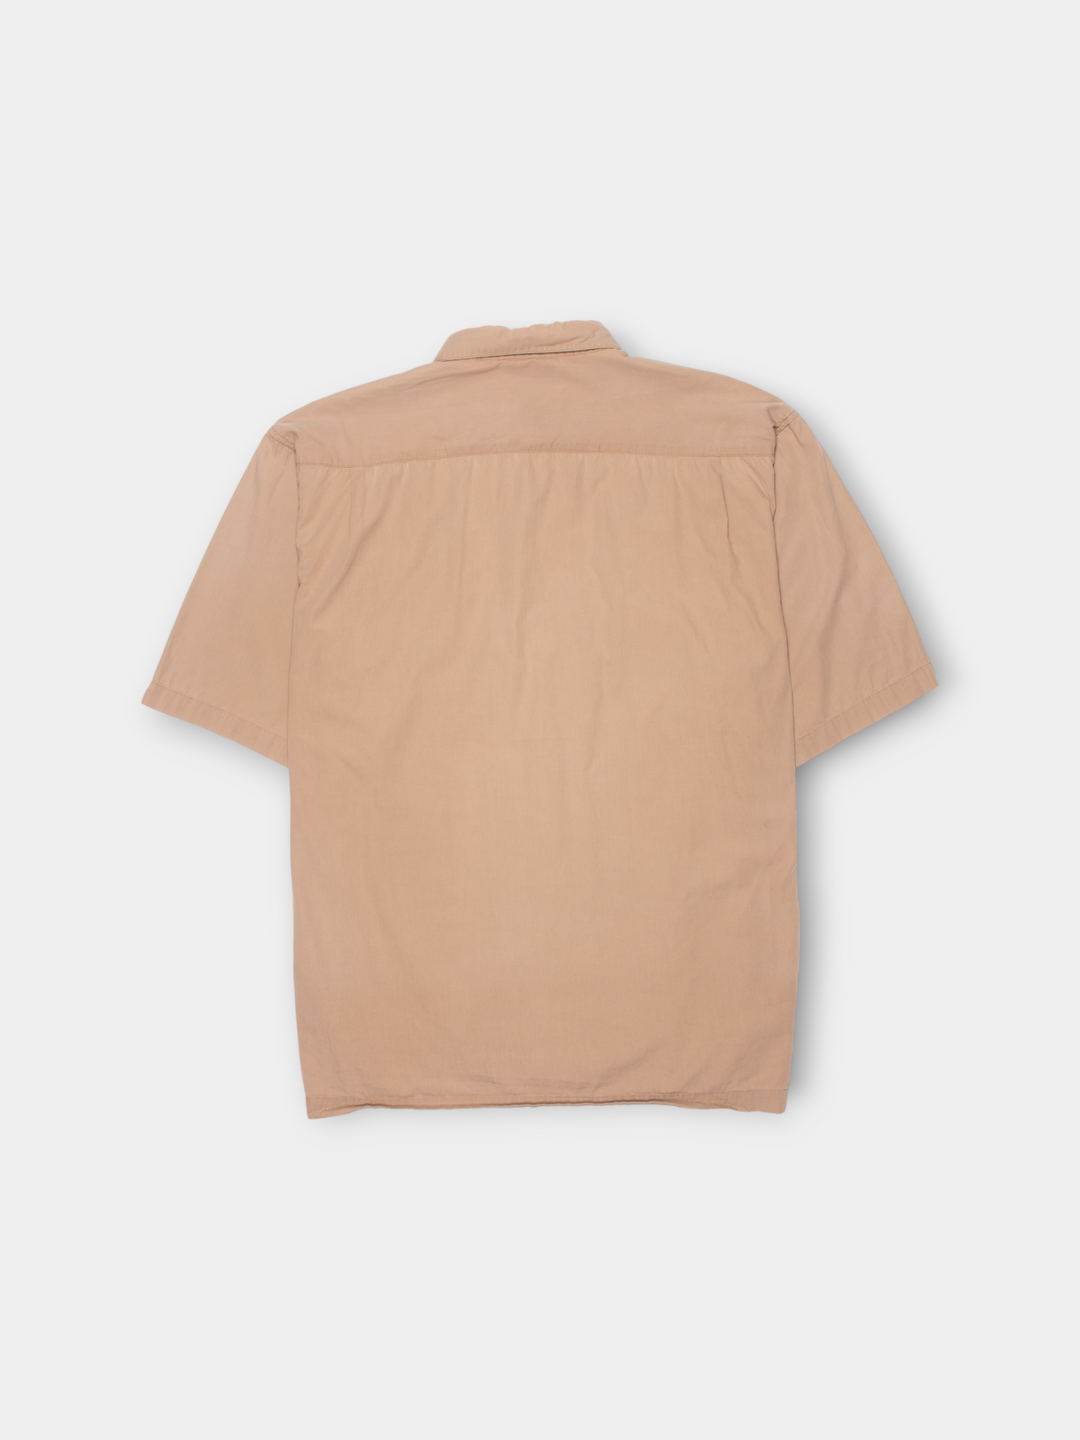 90s Columbia Short Sleeve Shirt (XL)